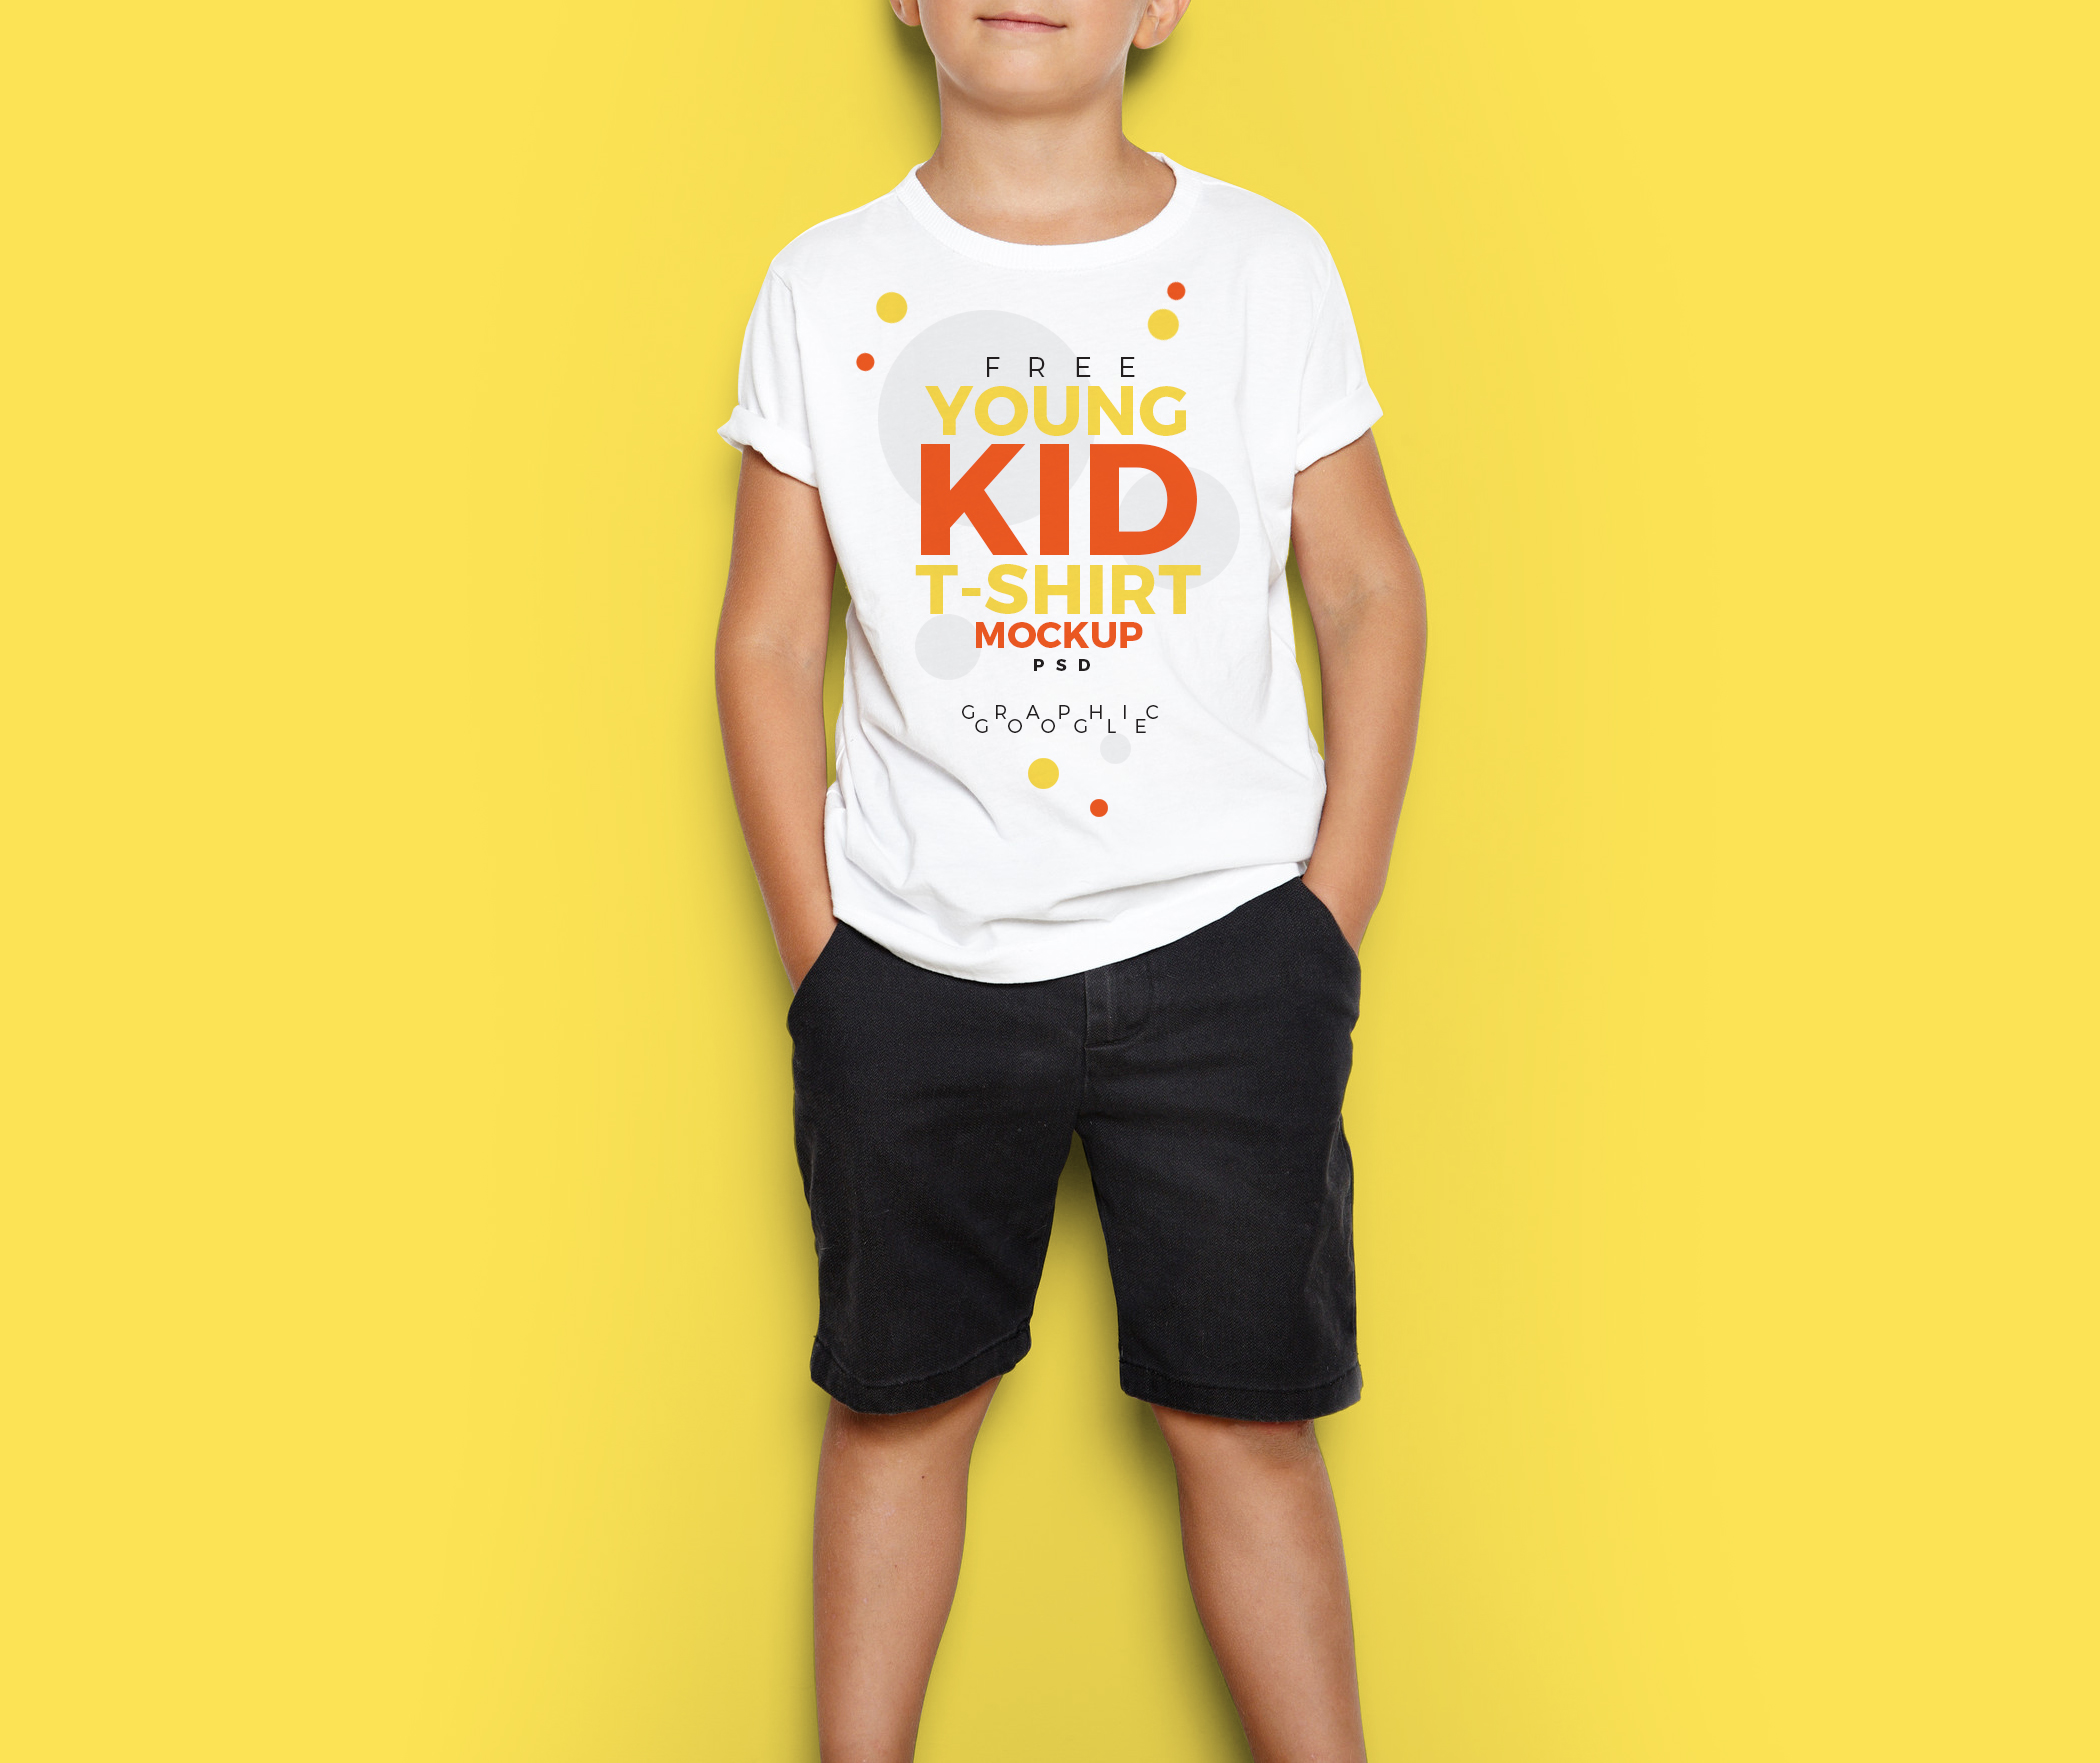 Free young kid t shirt mockup Idea | kickinsurf